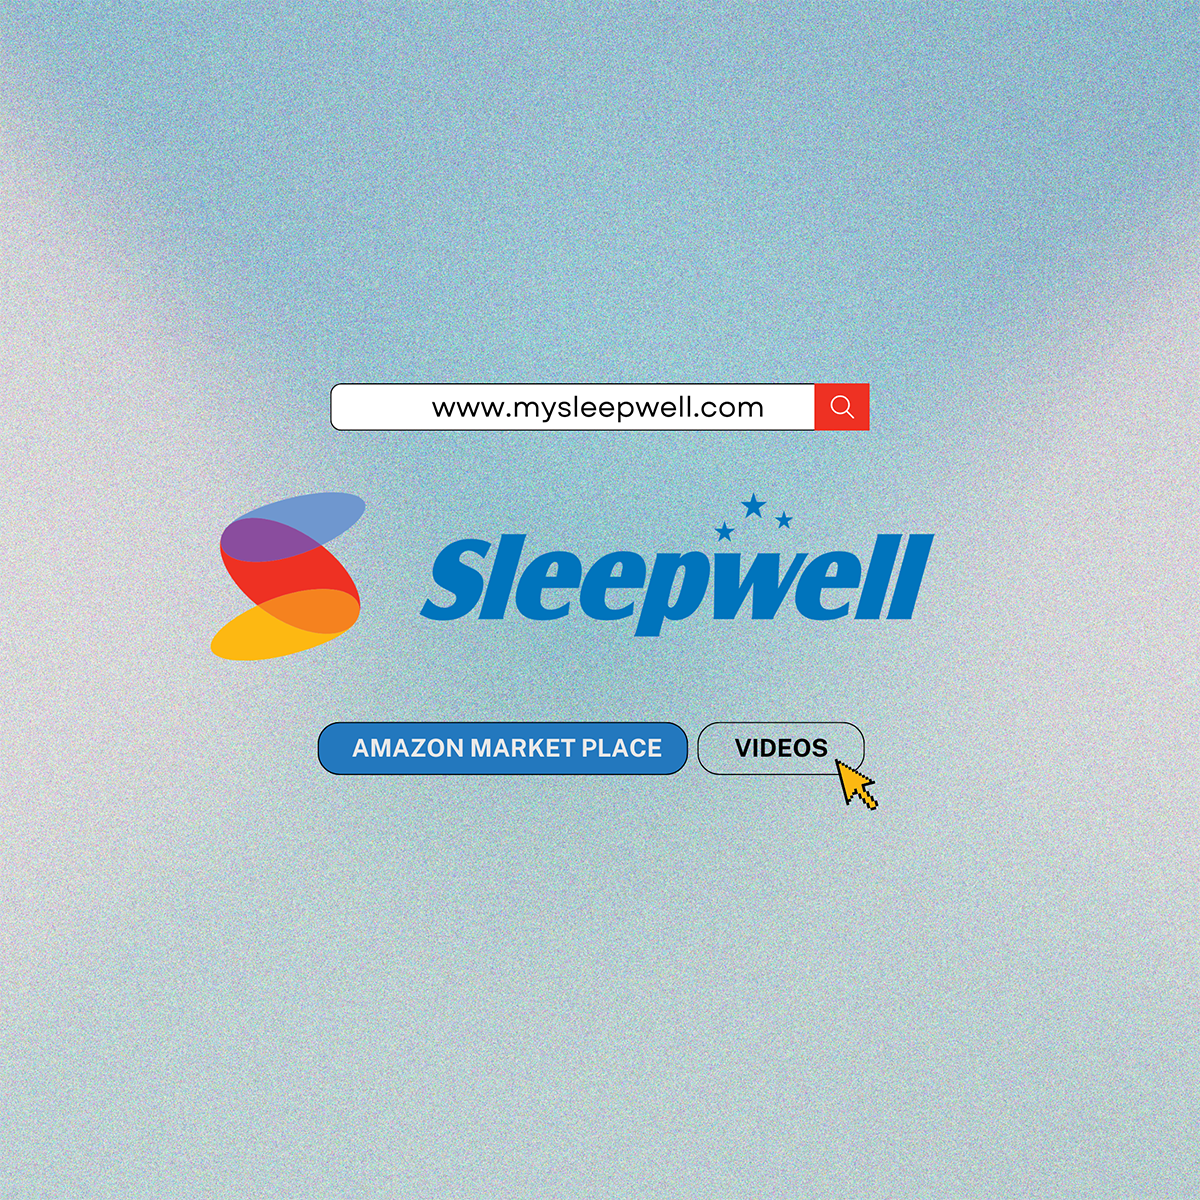 Sleepwell